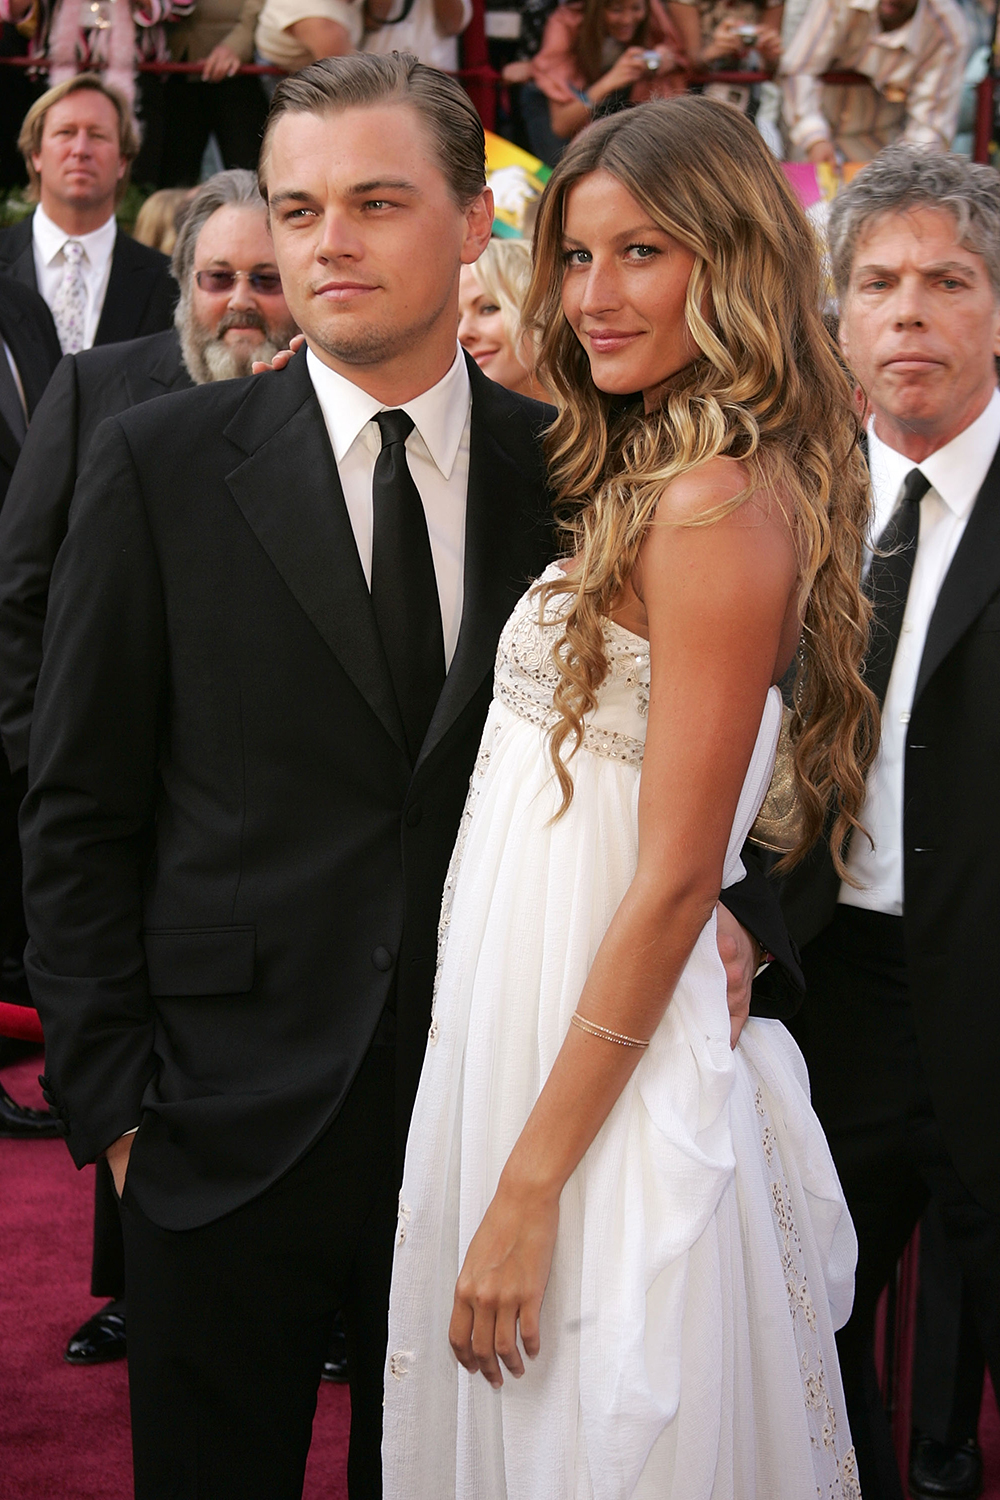 Leonardo DiCaprio met Victoria's Secret Angel Gisele Bündchen in 2000. The couple dated until 2005 before calling it quits. Gisele remains Leo's longest lasting romance.